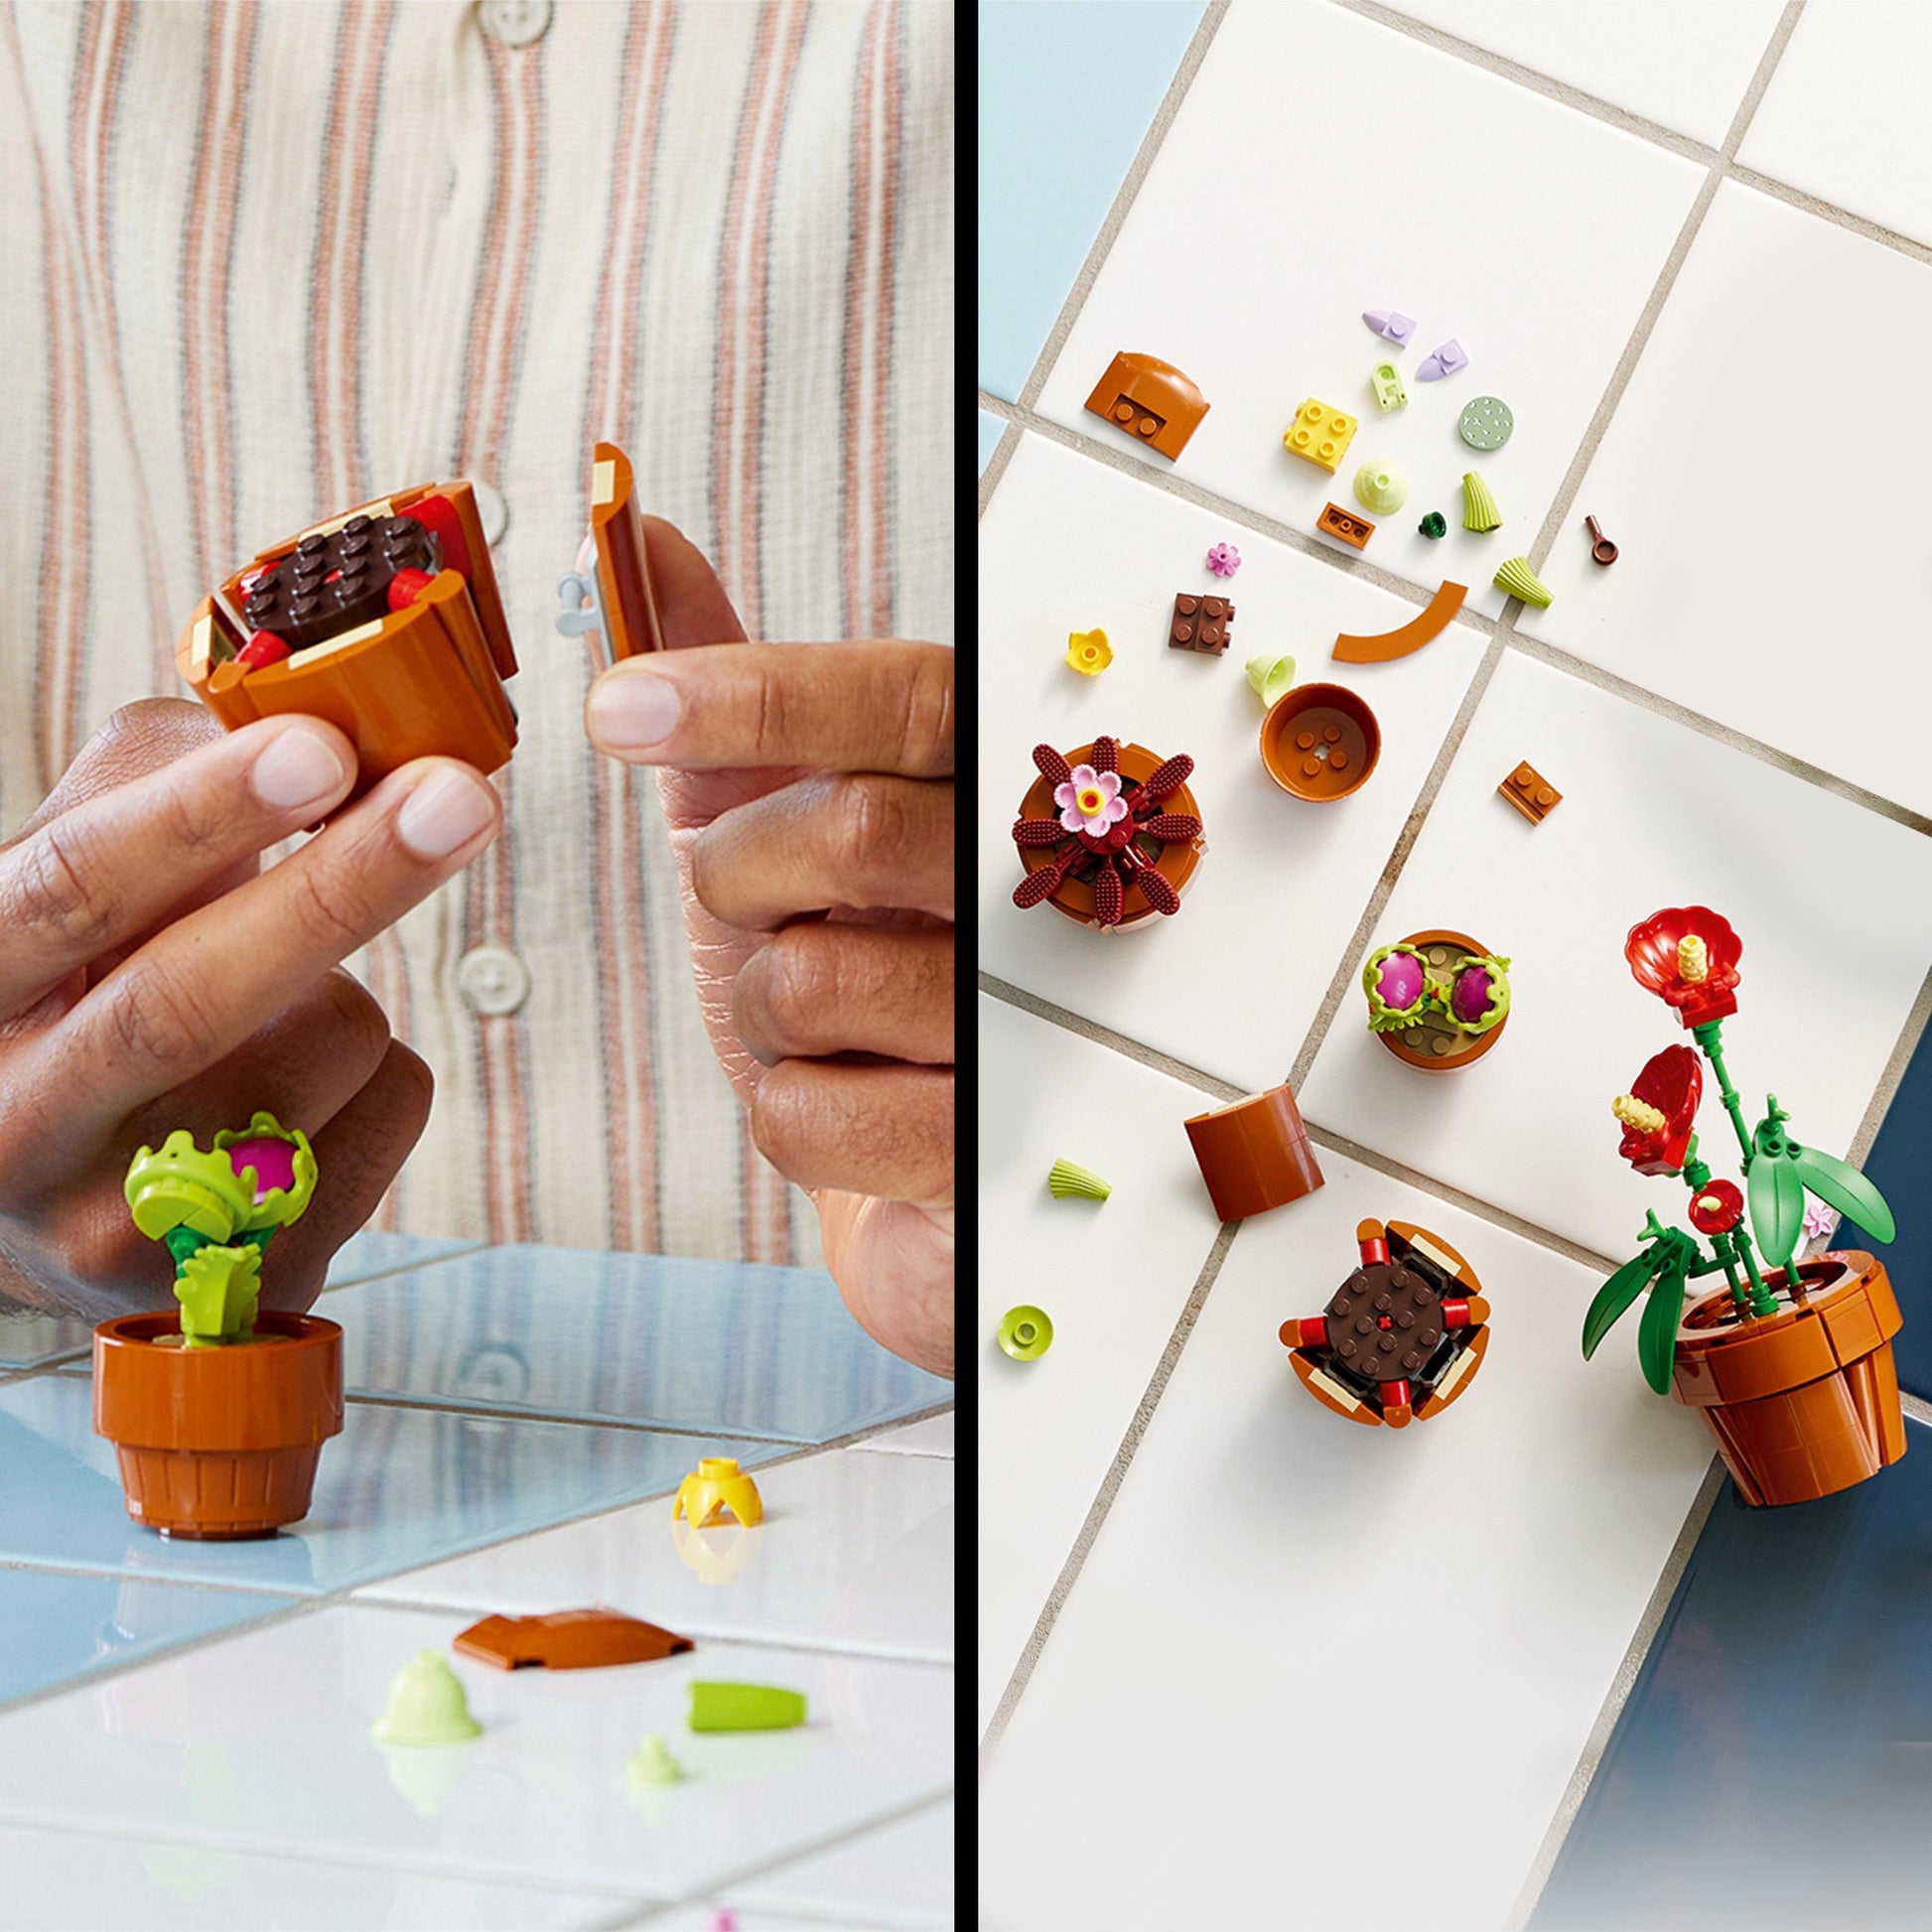 LEGO Miniplantjes 10329 Icons | 2TTOYS ✓ Official shop<br>